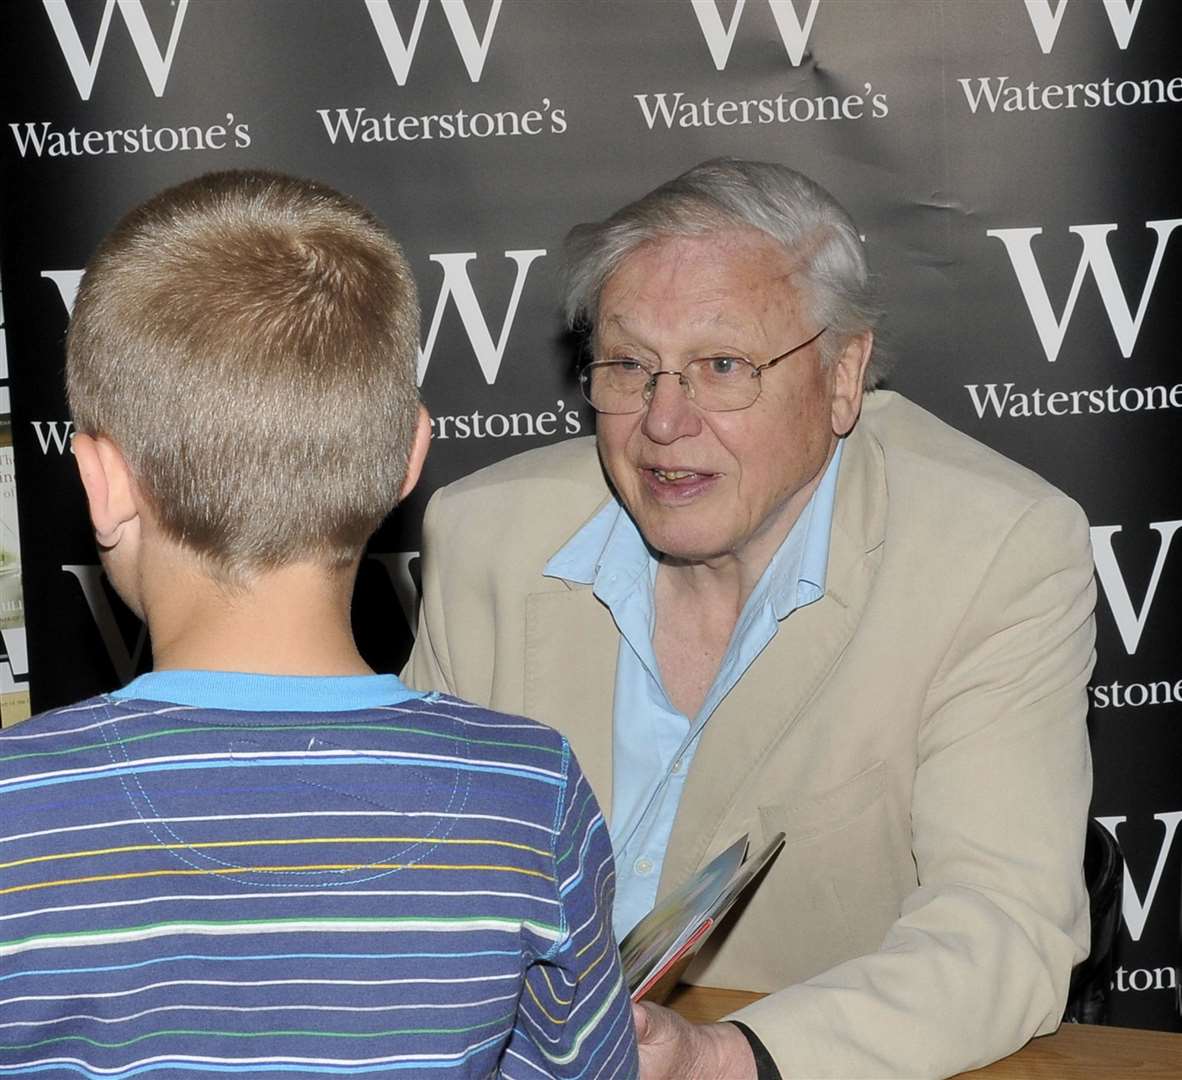 Sir David Attenborough meeting a young fan in June 2009